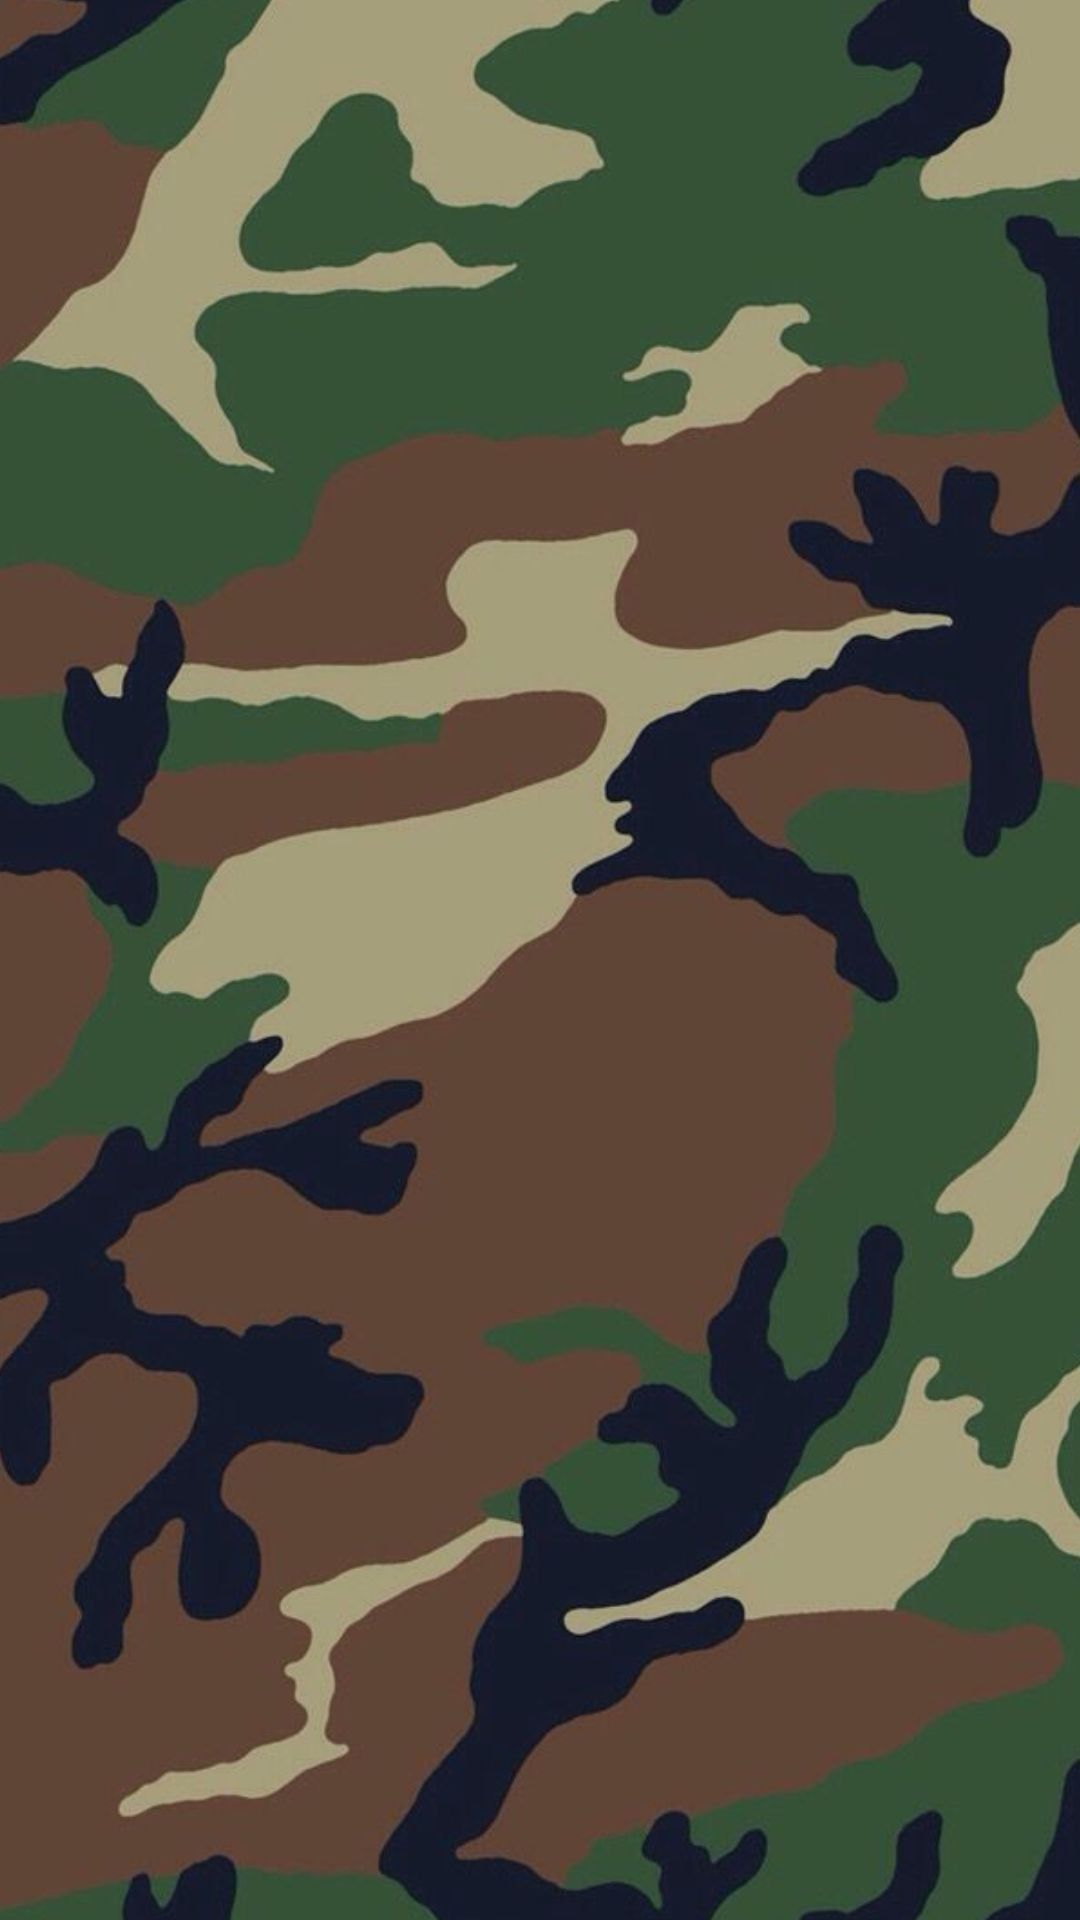 Colorful Wallpaper, Cool Wallpaper, Mobile Wallpaper, Army Uniform Colour